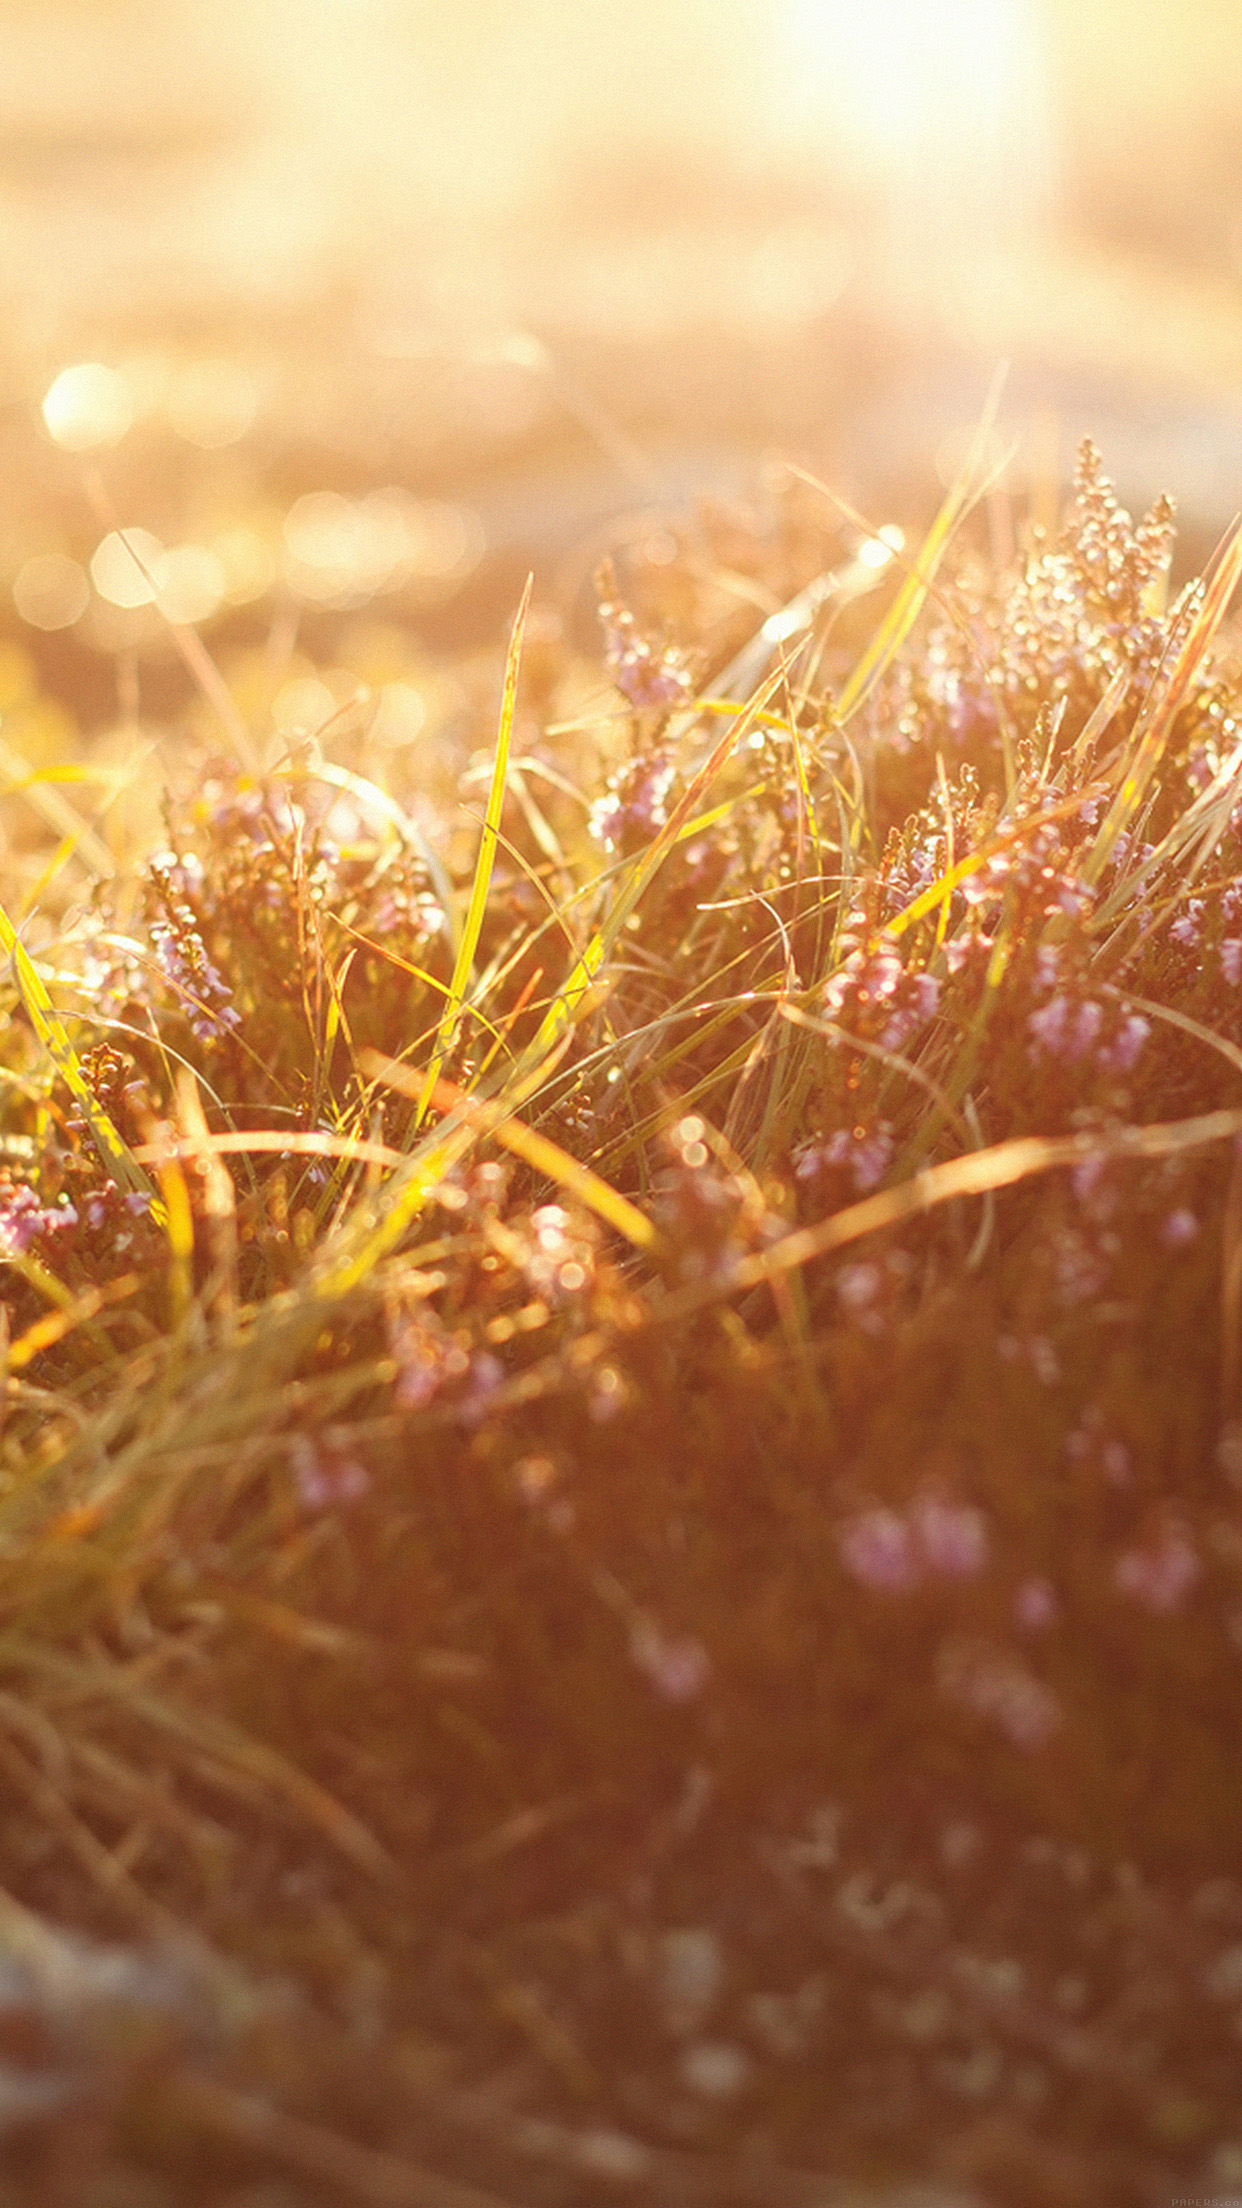 Sun Rise Flower Grass Love Nature Android wallpaper